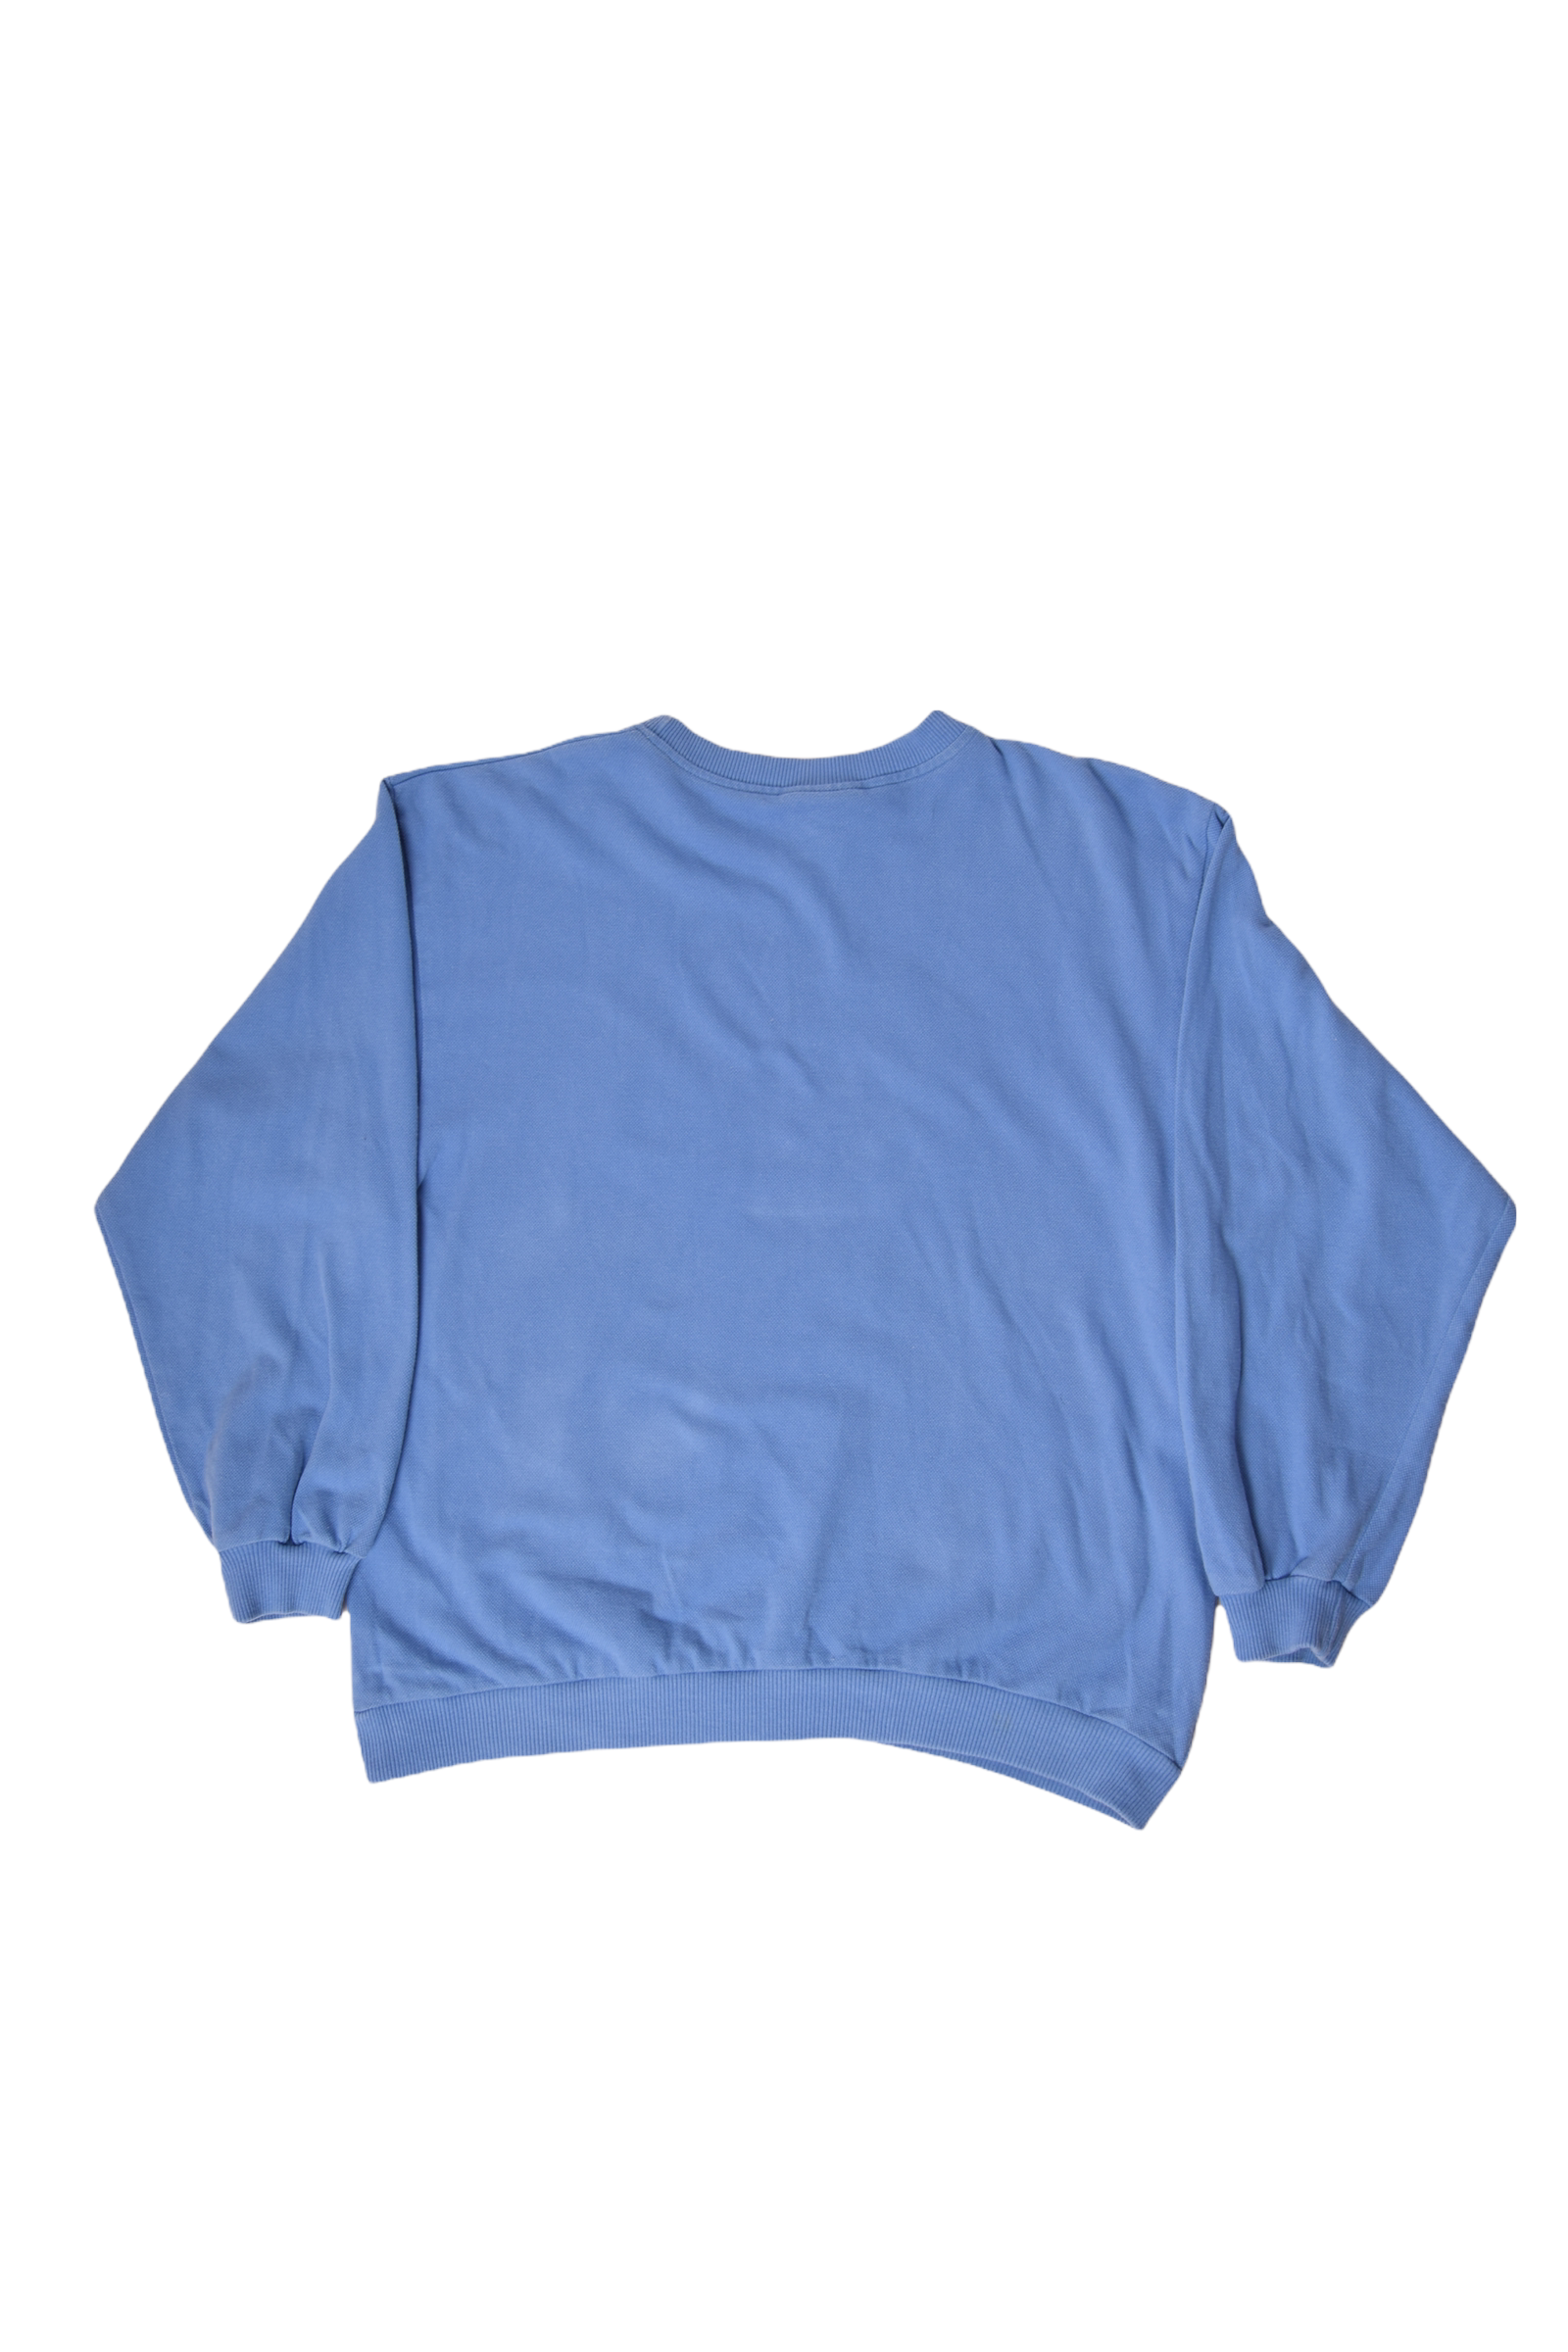 Vintage 80's Lacoste Pique Sweatshirt Crew Neck Made in France Size M-L 100% Cotton